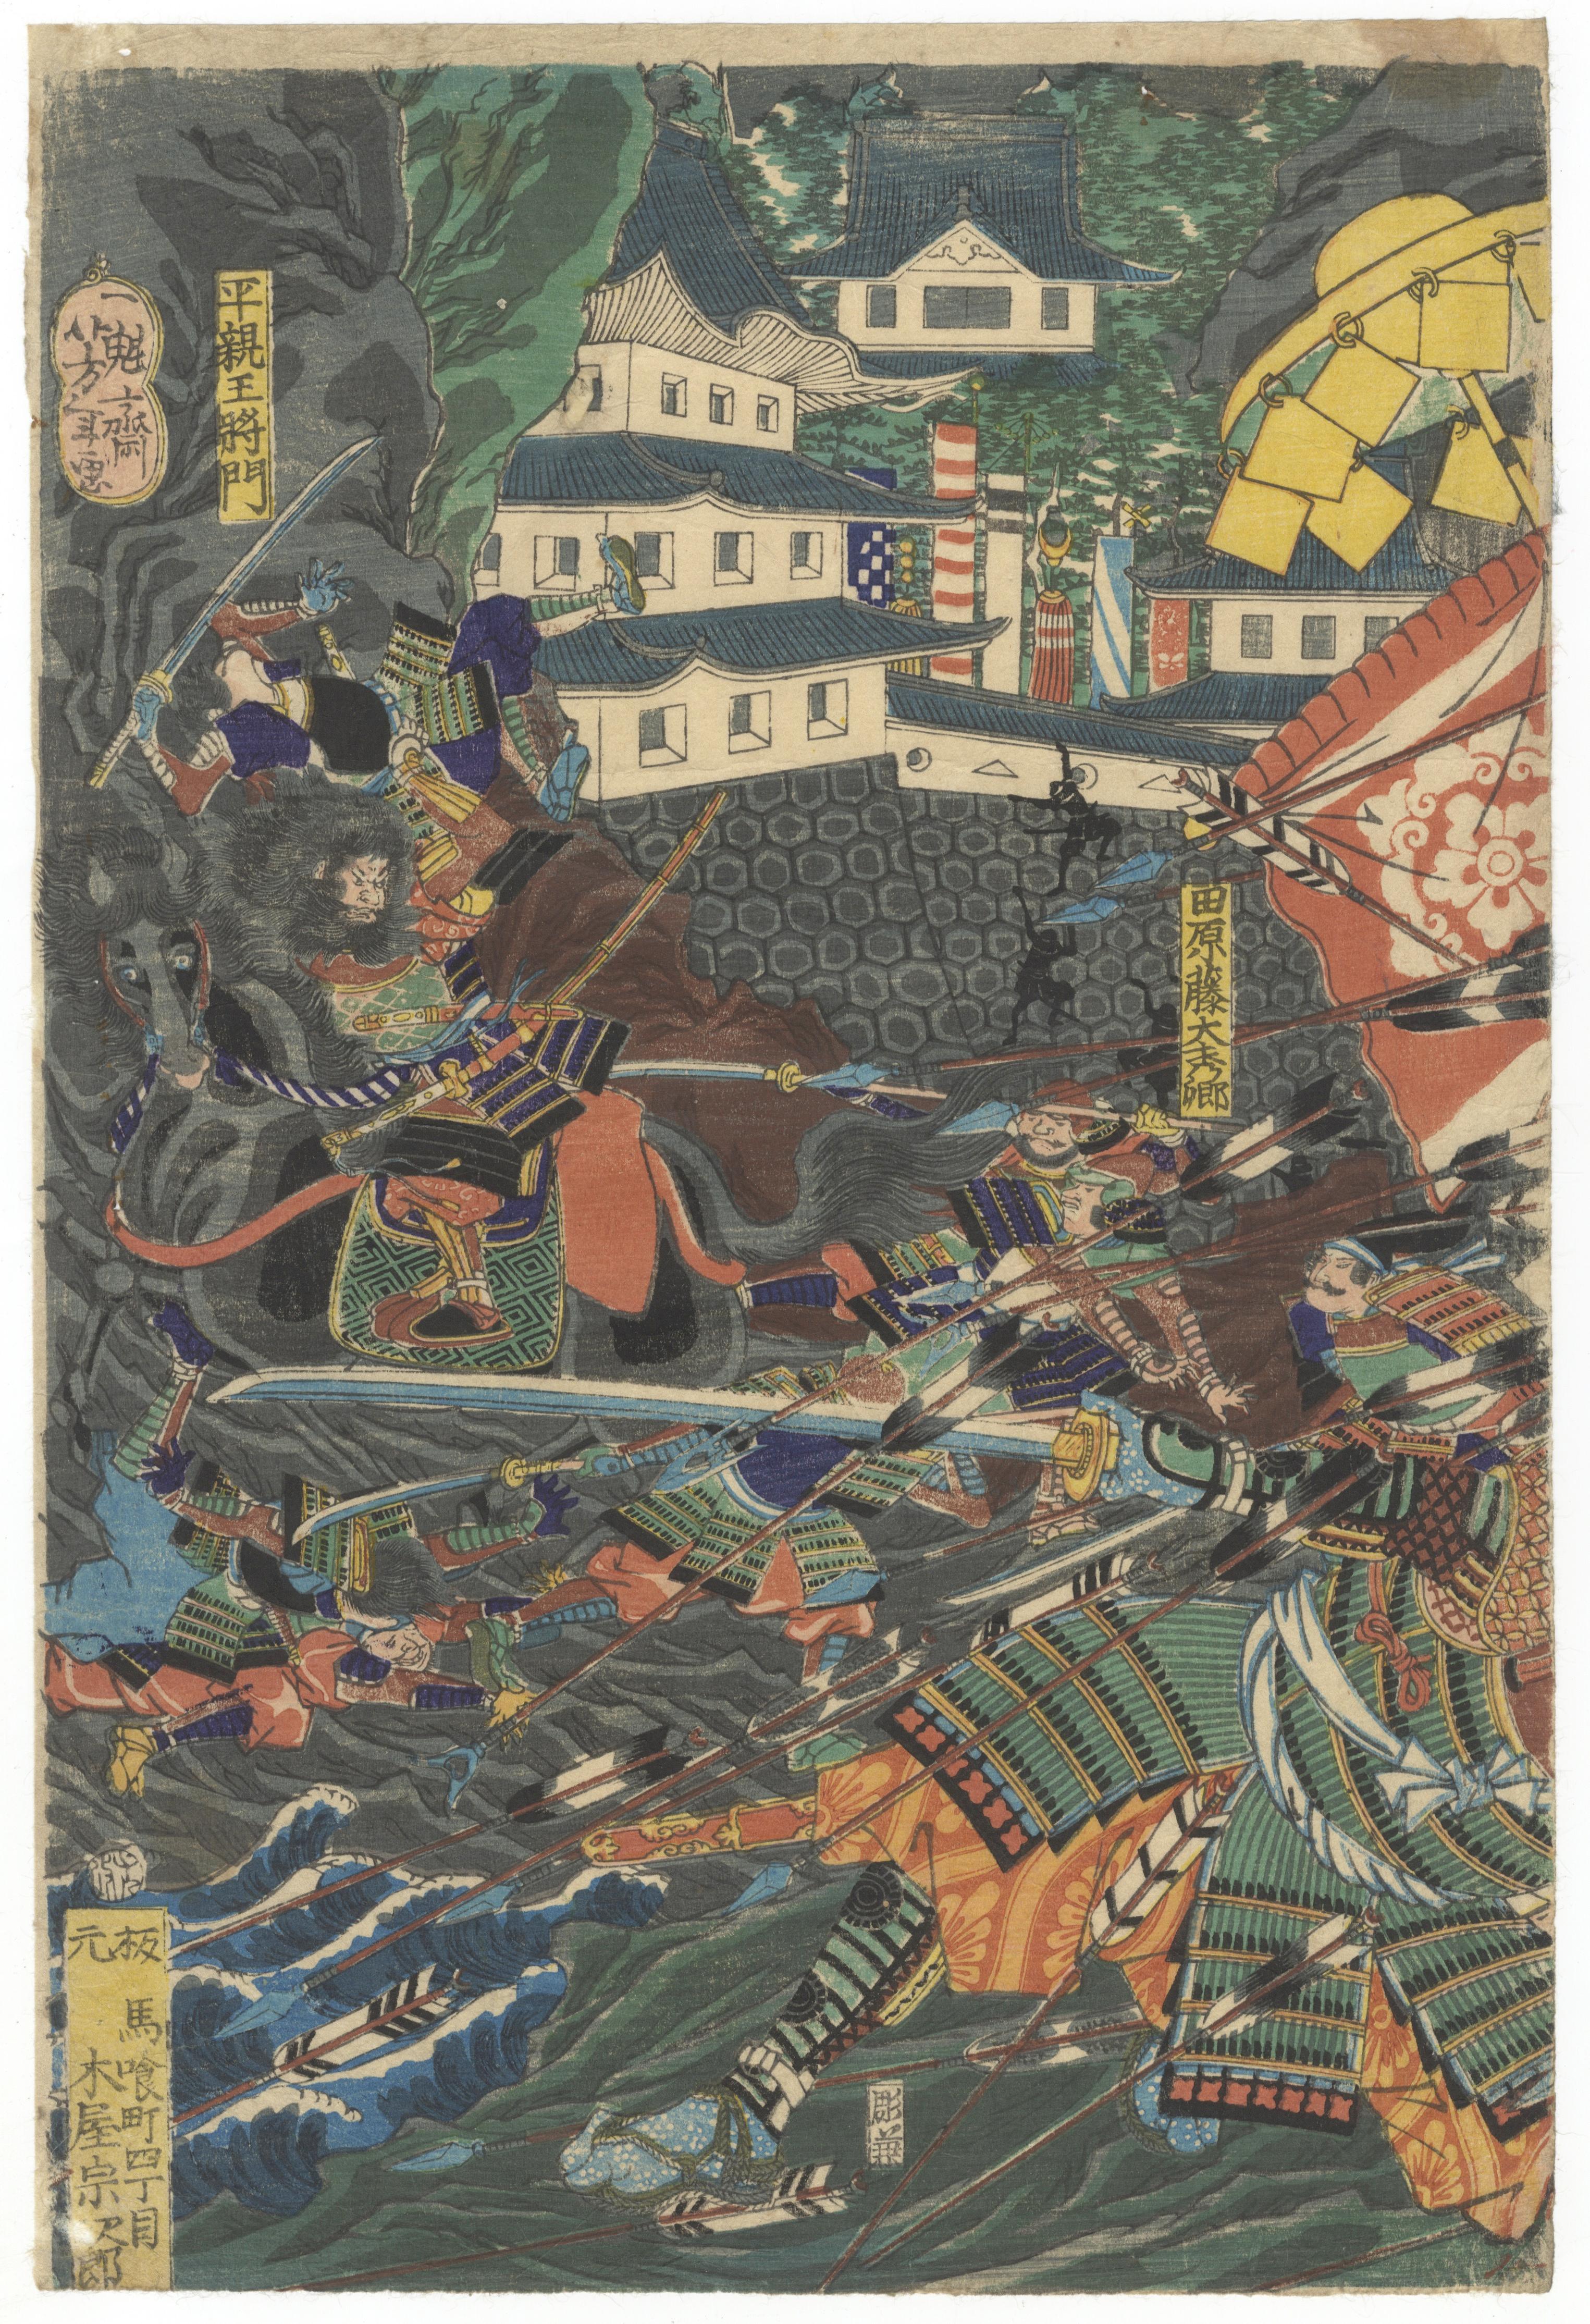 Artist: Yoshitoshi Tsukioka (1839-1892)
Title: The Battle of Karashima in the Earlier Taiheiki
Publisher: Kiya Sojiro
Date: 1864
Dimensions: (L) 24.8 x 36.8 (C) 24.8 x 36.7 (R) 24.9 x 36.8 cm

Hailing down on Taira no Masakado's (903-940)